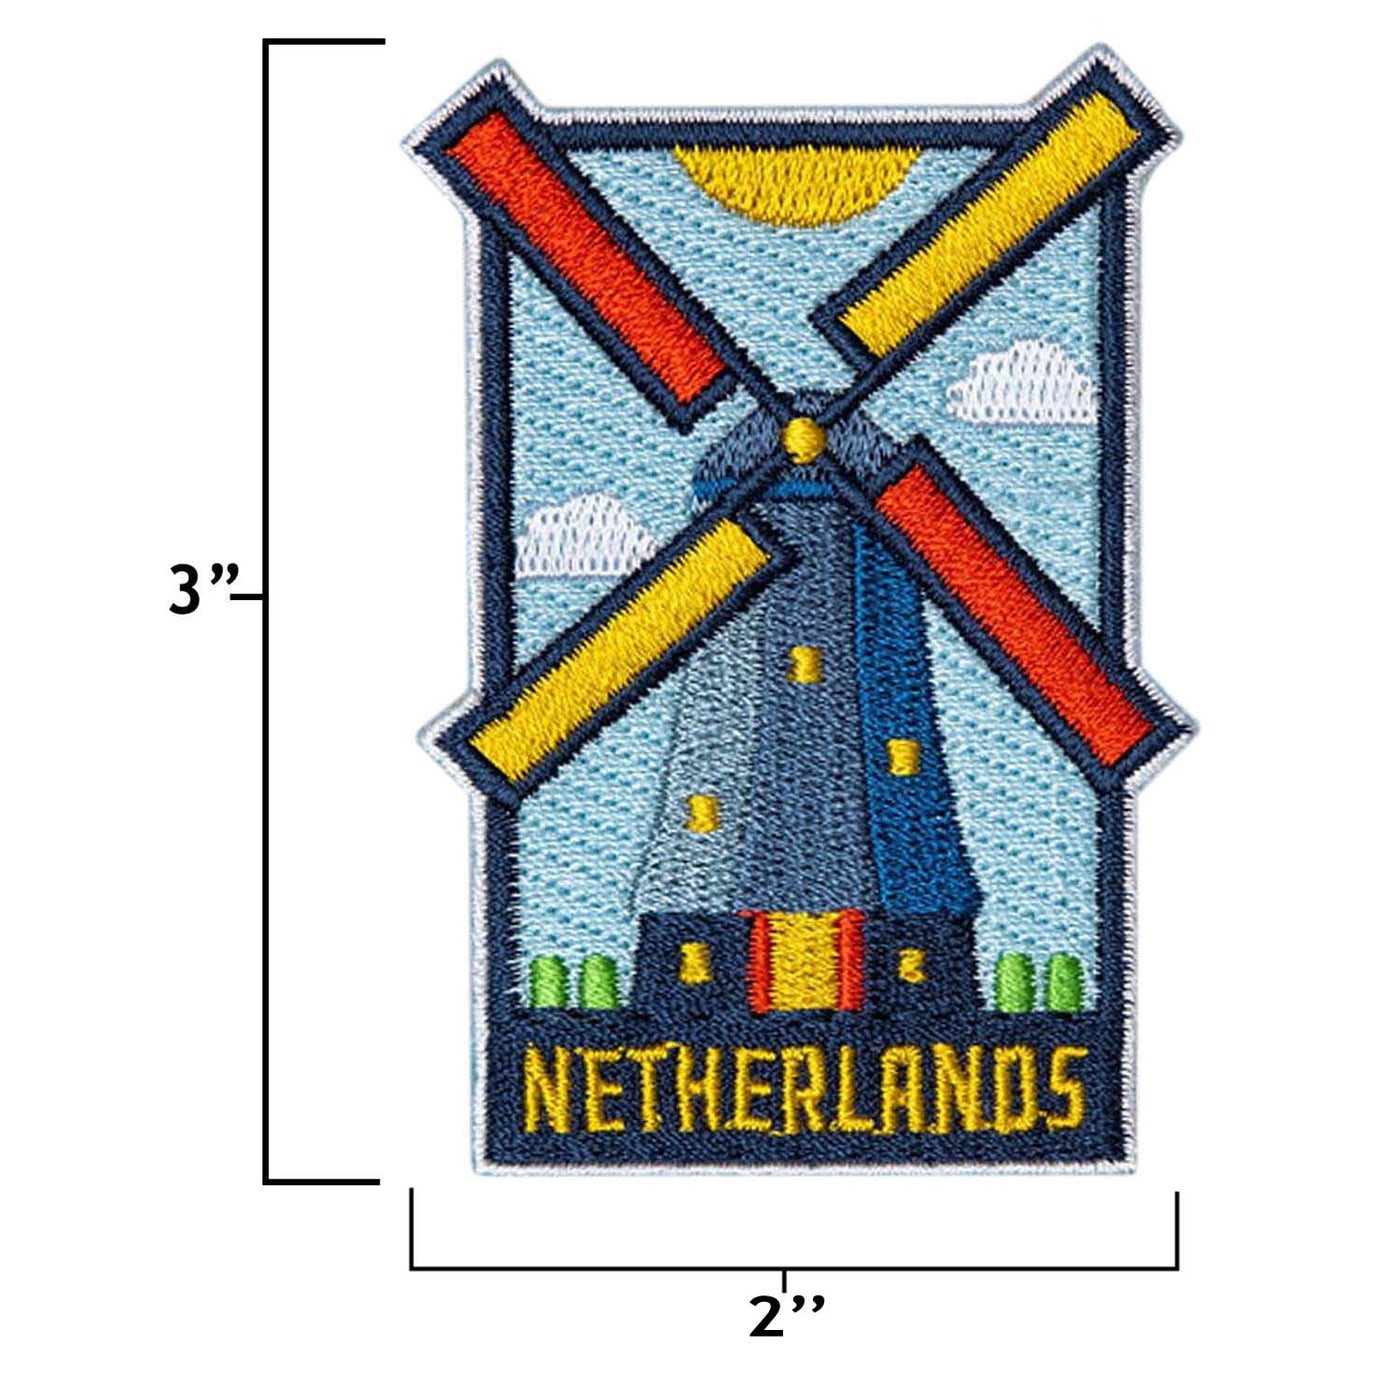 The Netherlands Hook Patch